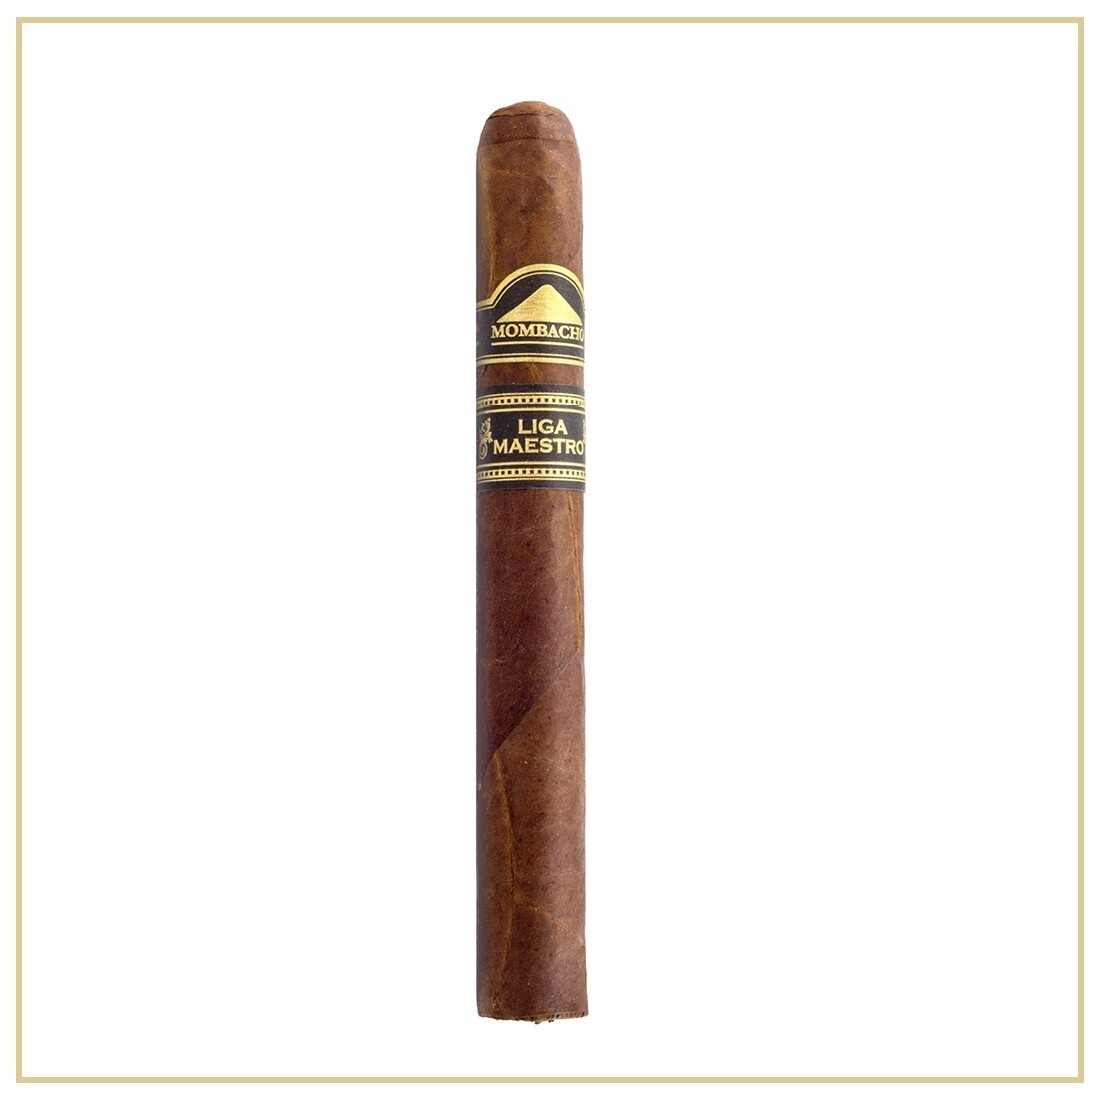 Mombacho Liga Maestro Double Robusto 6 3/4 x 50 Single Cigar